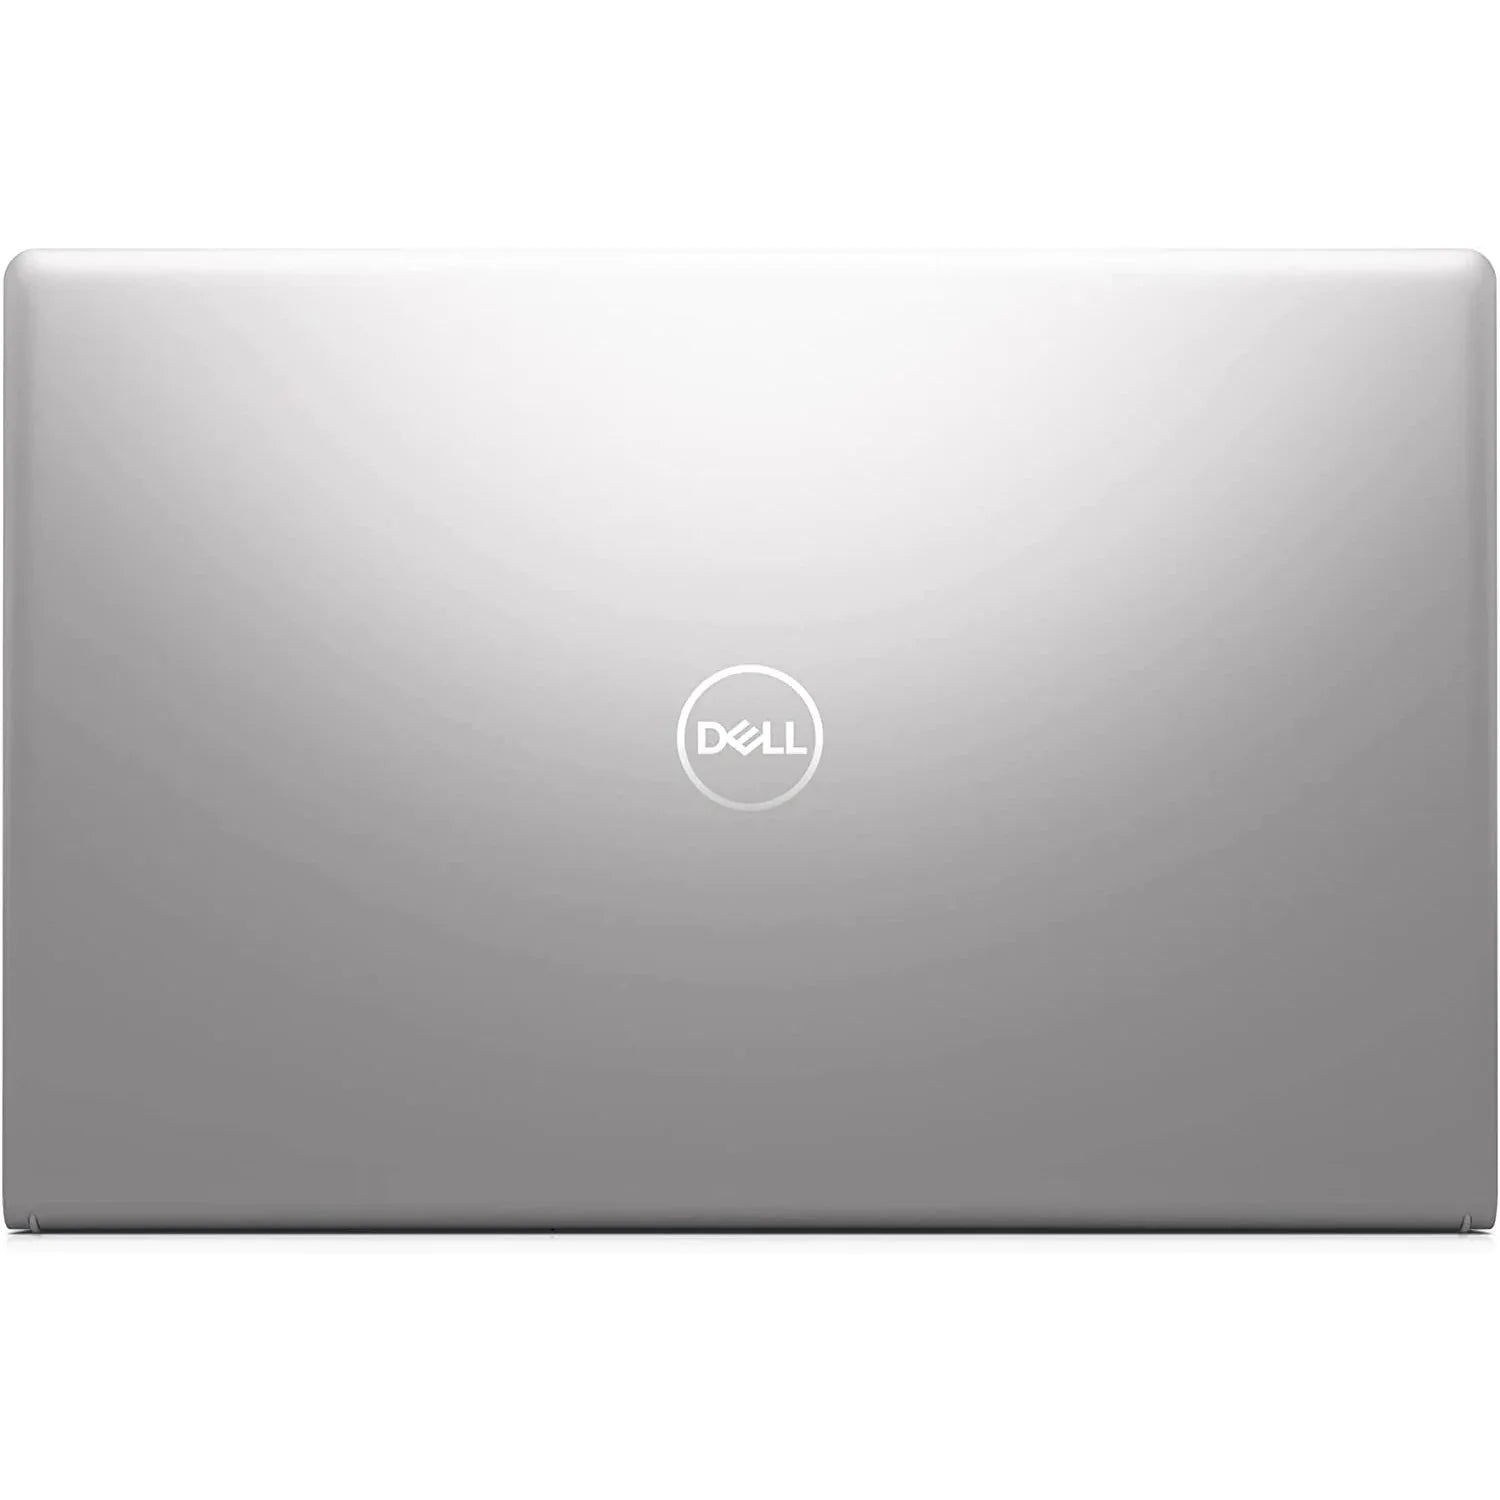 Dell Inspiron 15 3511 Laptop Intel Core i5 8GB RAM 512GB SSD - Refurbished Good